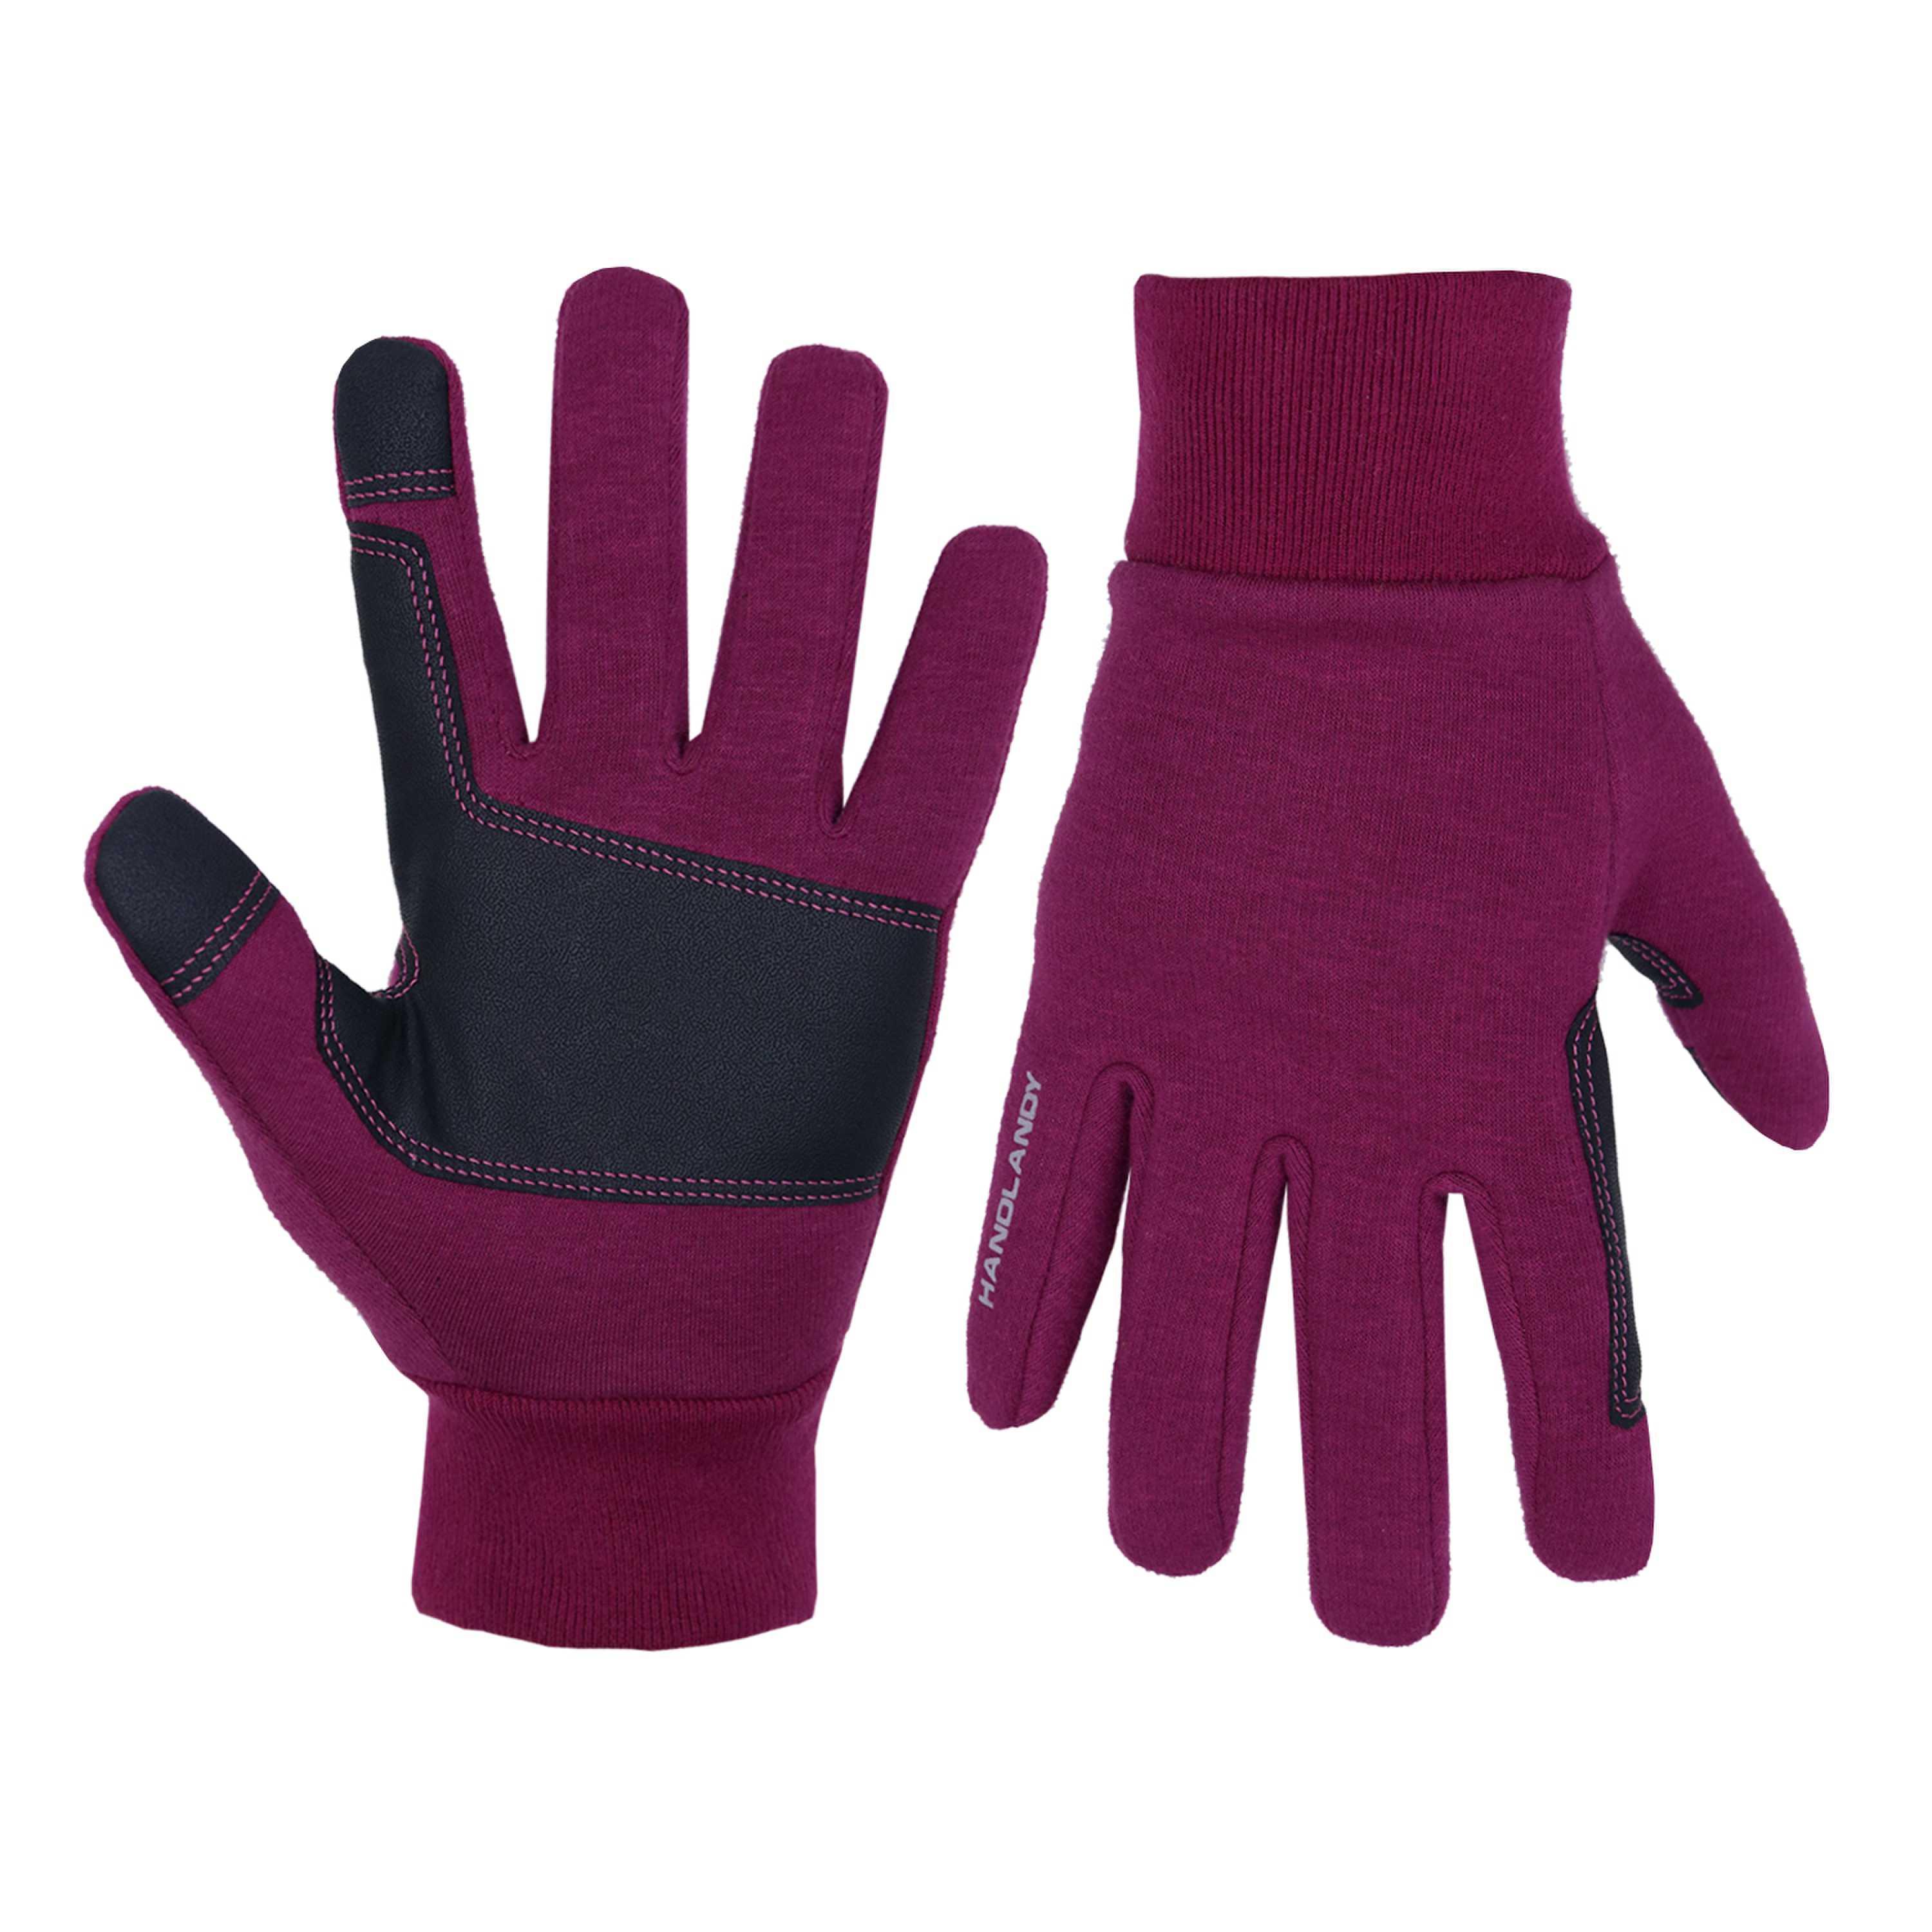 233 PRISAFETY Winter Warm Fleece Touch Screen Winter Running Thermal Gloves Outdoor Sports Gloves Bike Winter Gloves